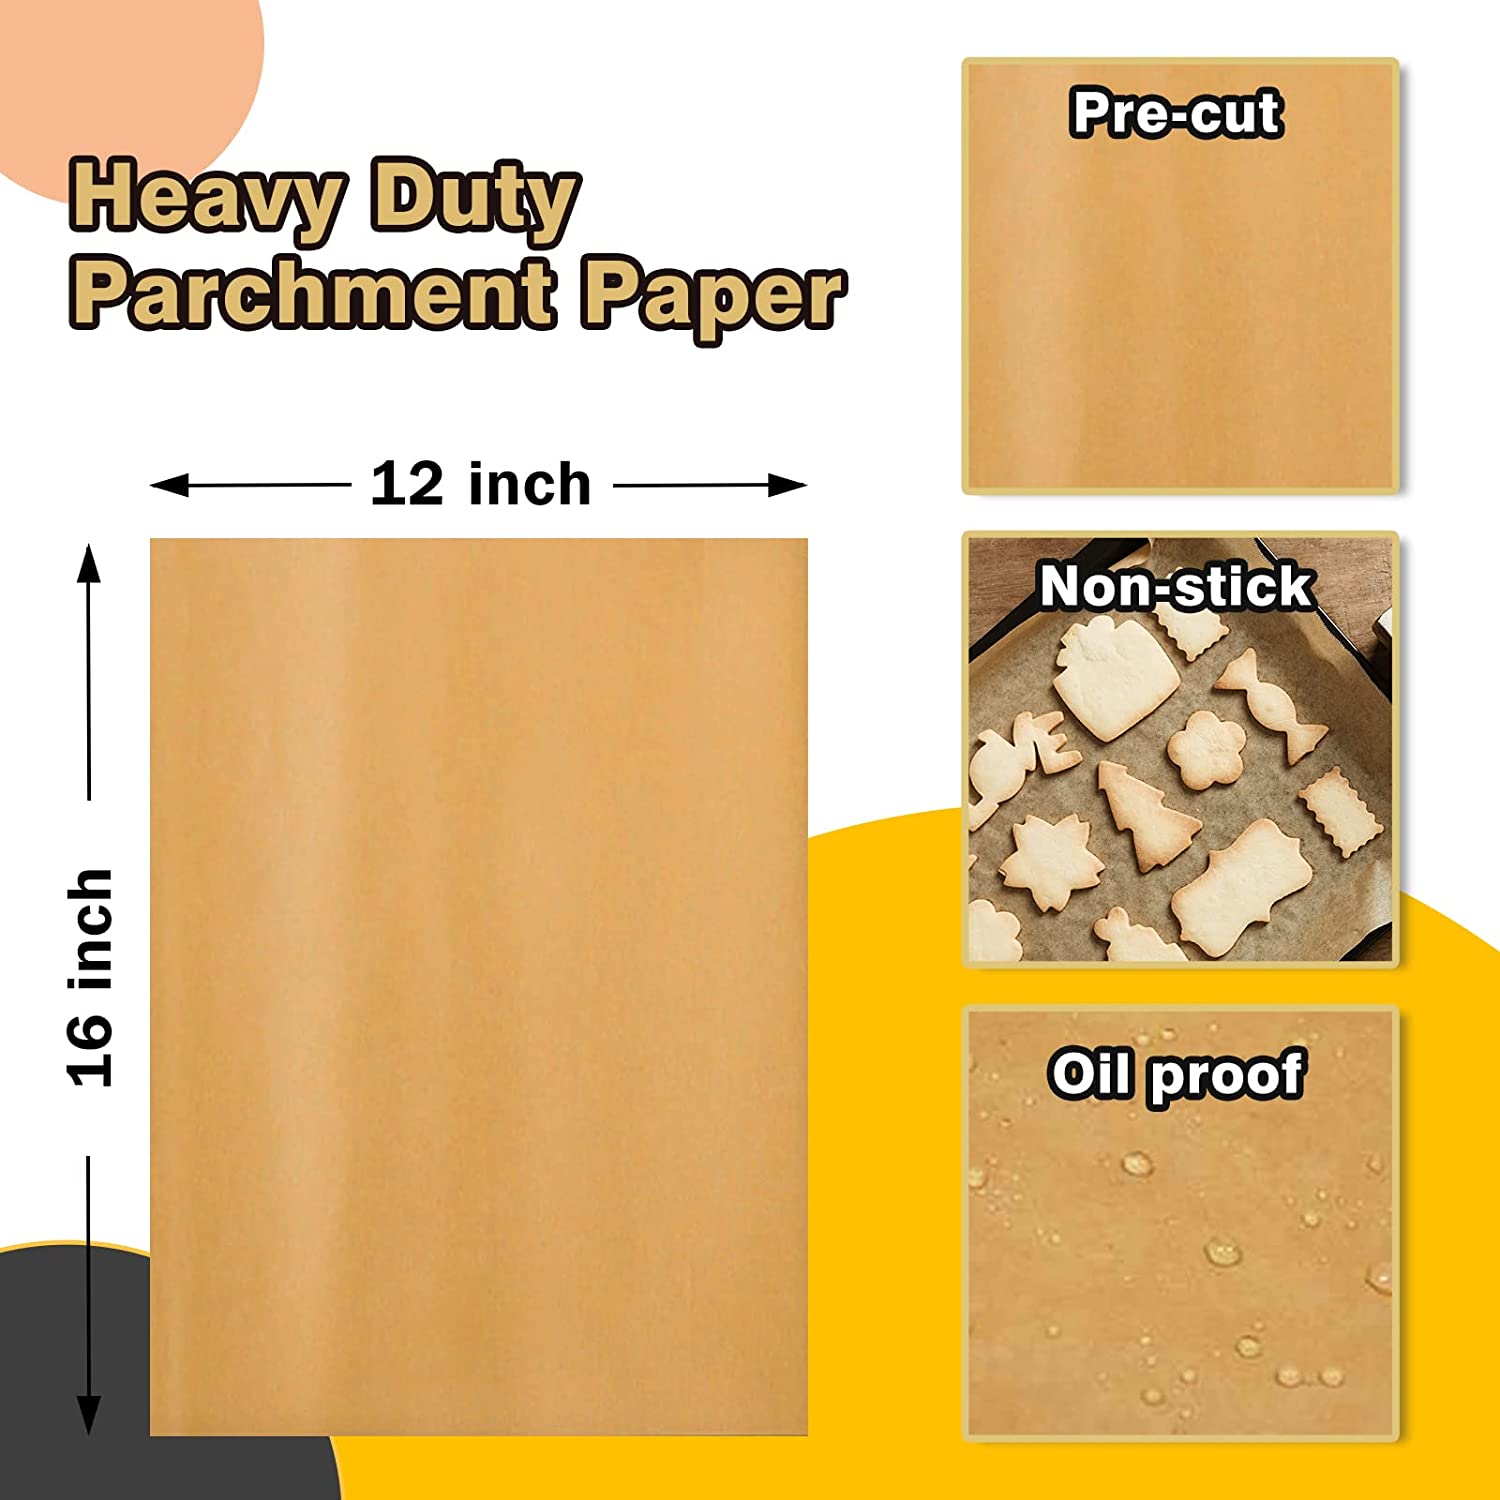 BAKLICIOUS 220 pcs 12x16 in parchment paper sheets, baklicious pre